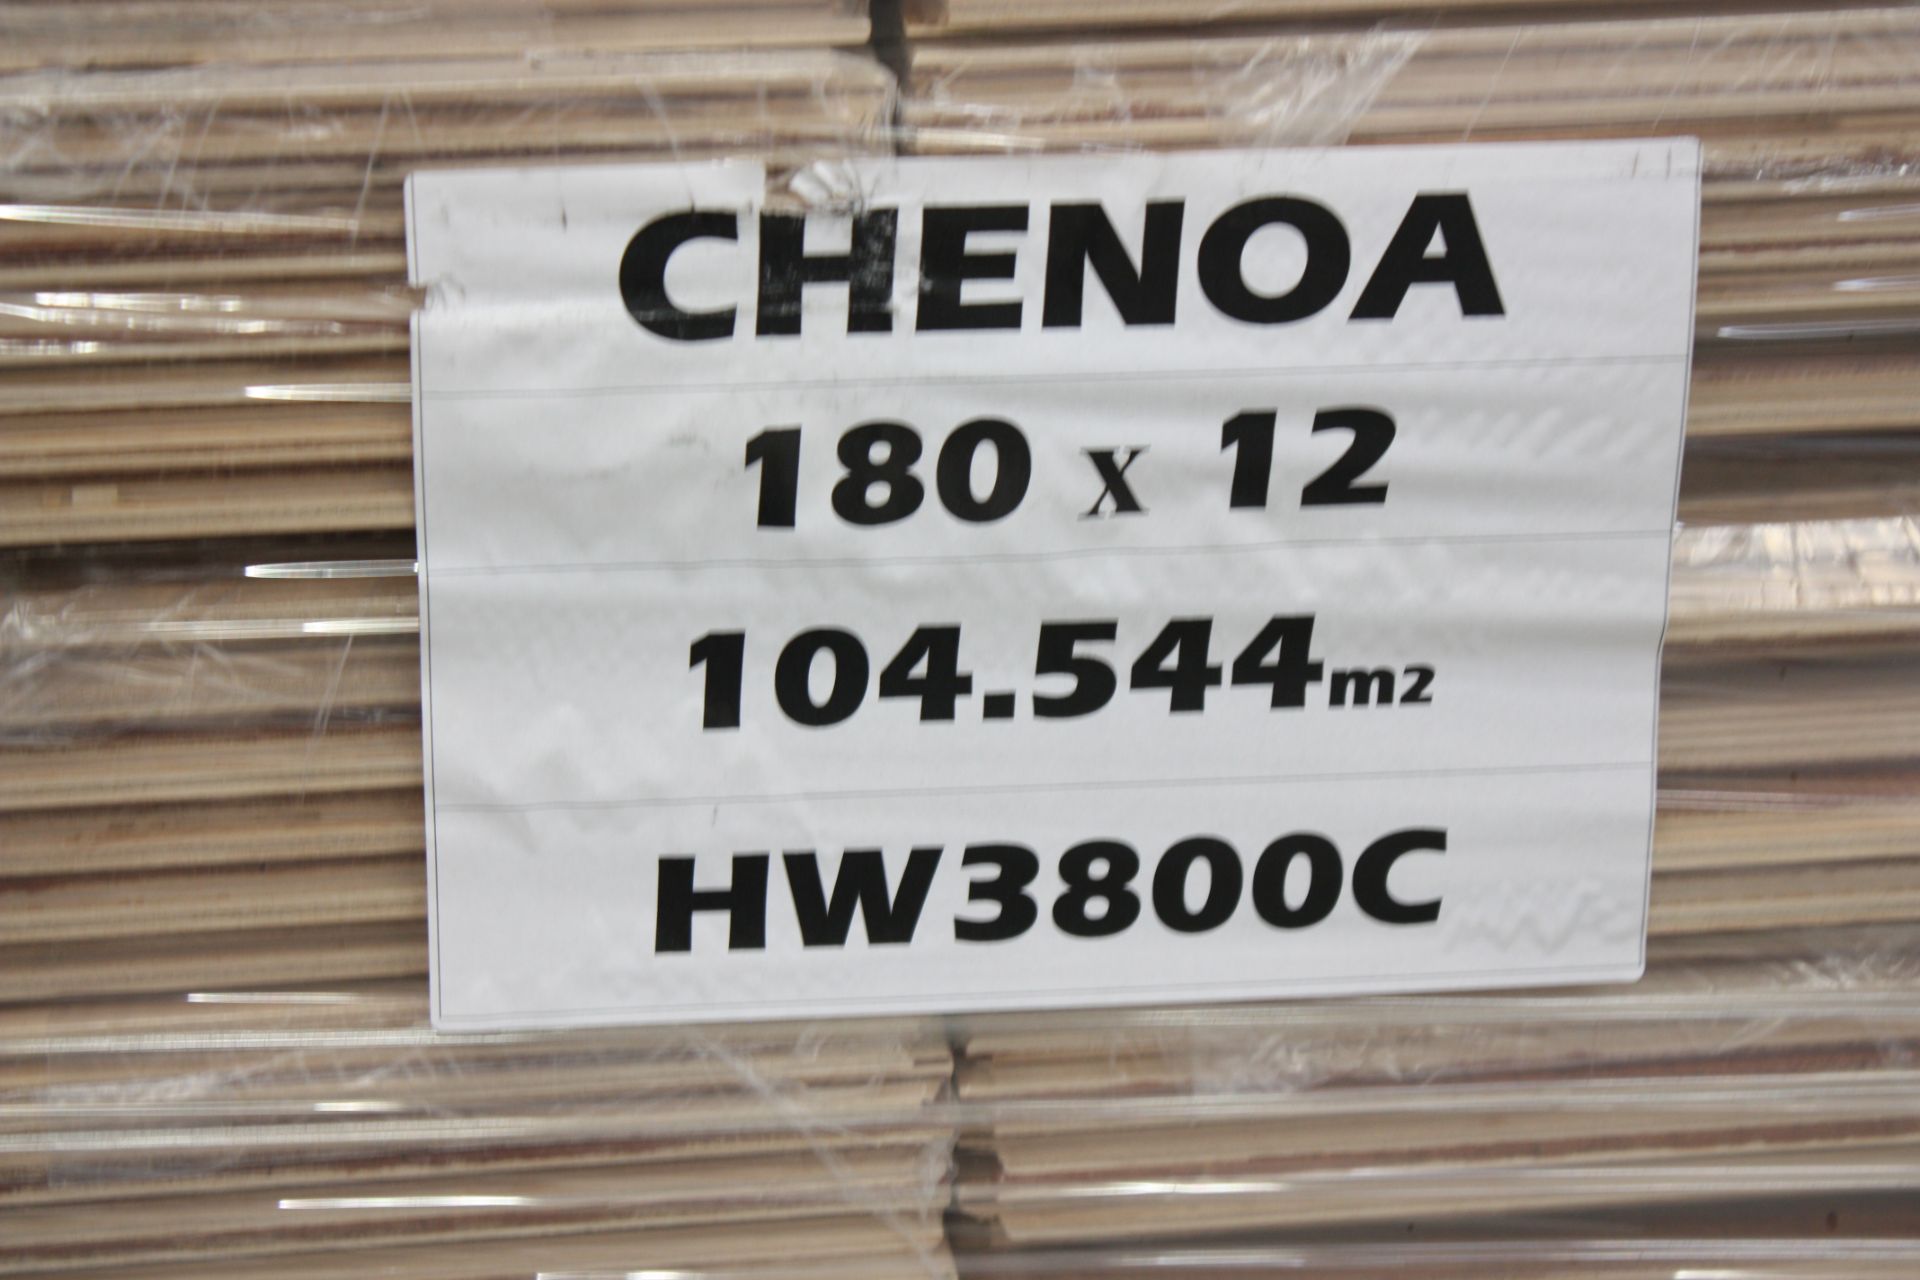 European Oak Flooring "Chenoa" colour, 109.3sqm - Image 3 of 5